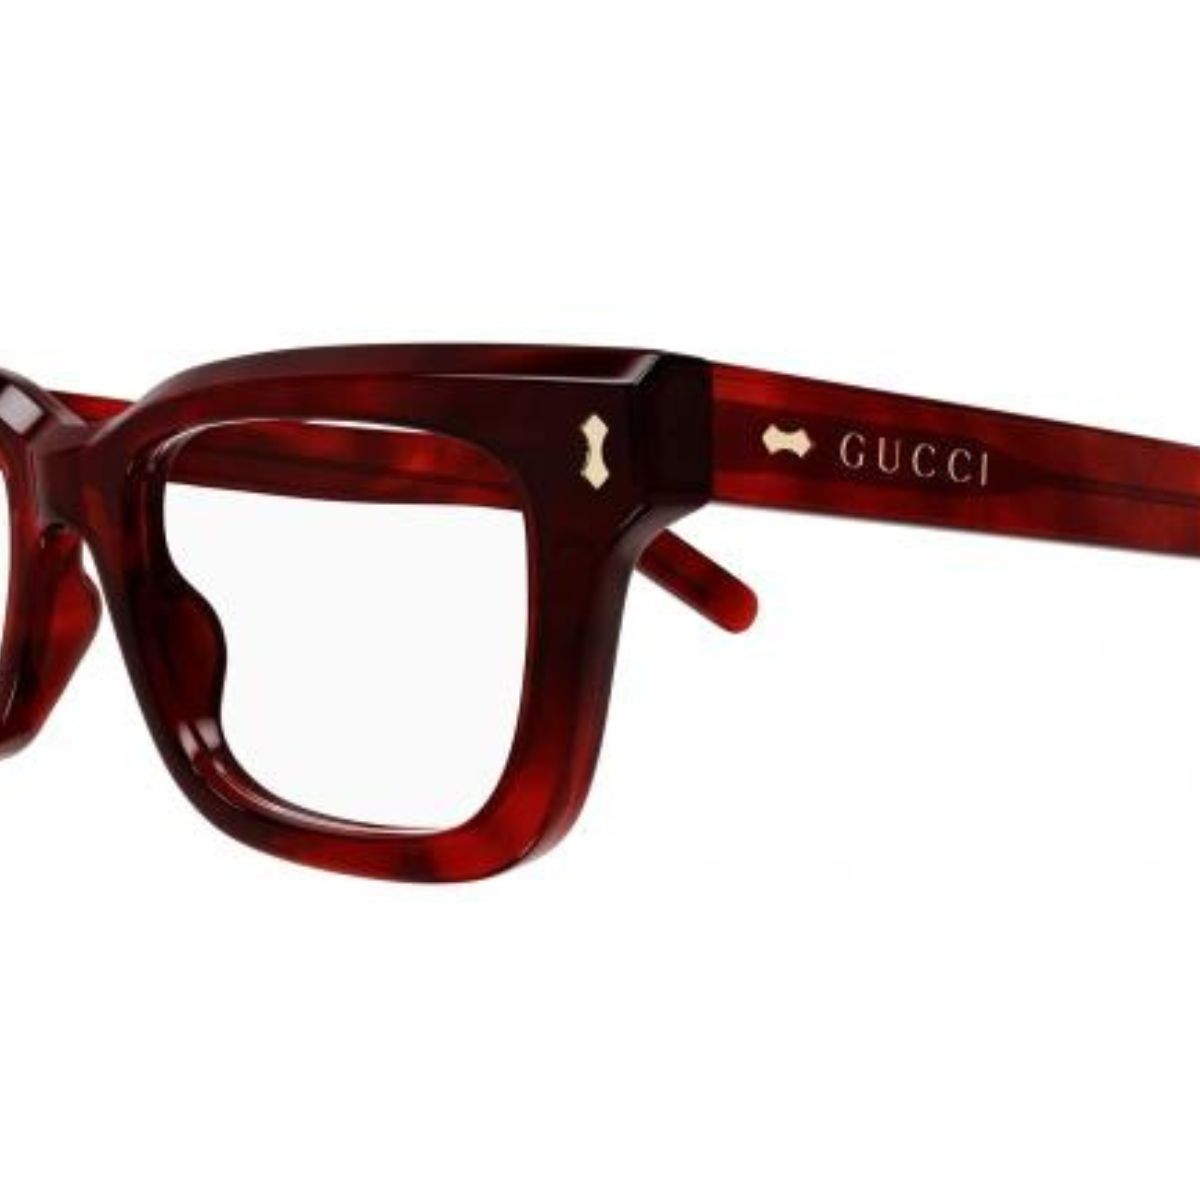 "Gucci GG1522O 007 eyesight glasses frame for women's at optorium"